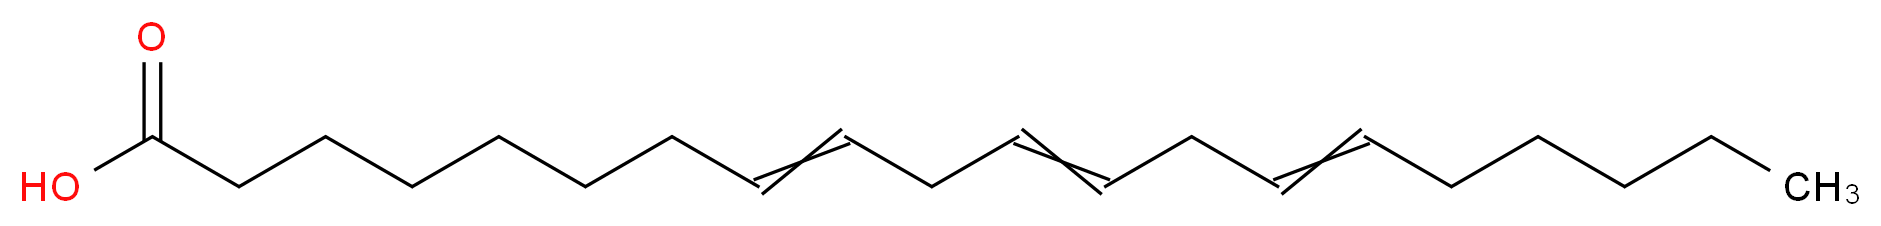 Dihomo-gamma-linolenic acid_分子结构_CAS_1783-84-2)